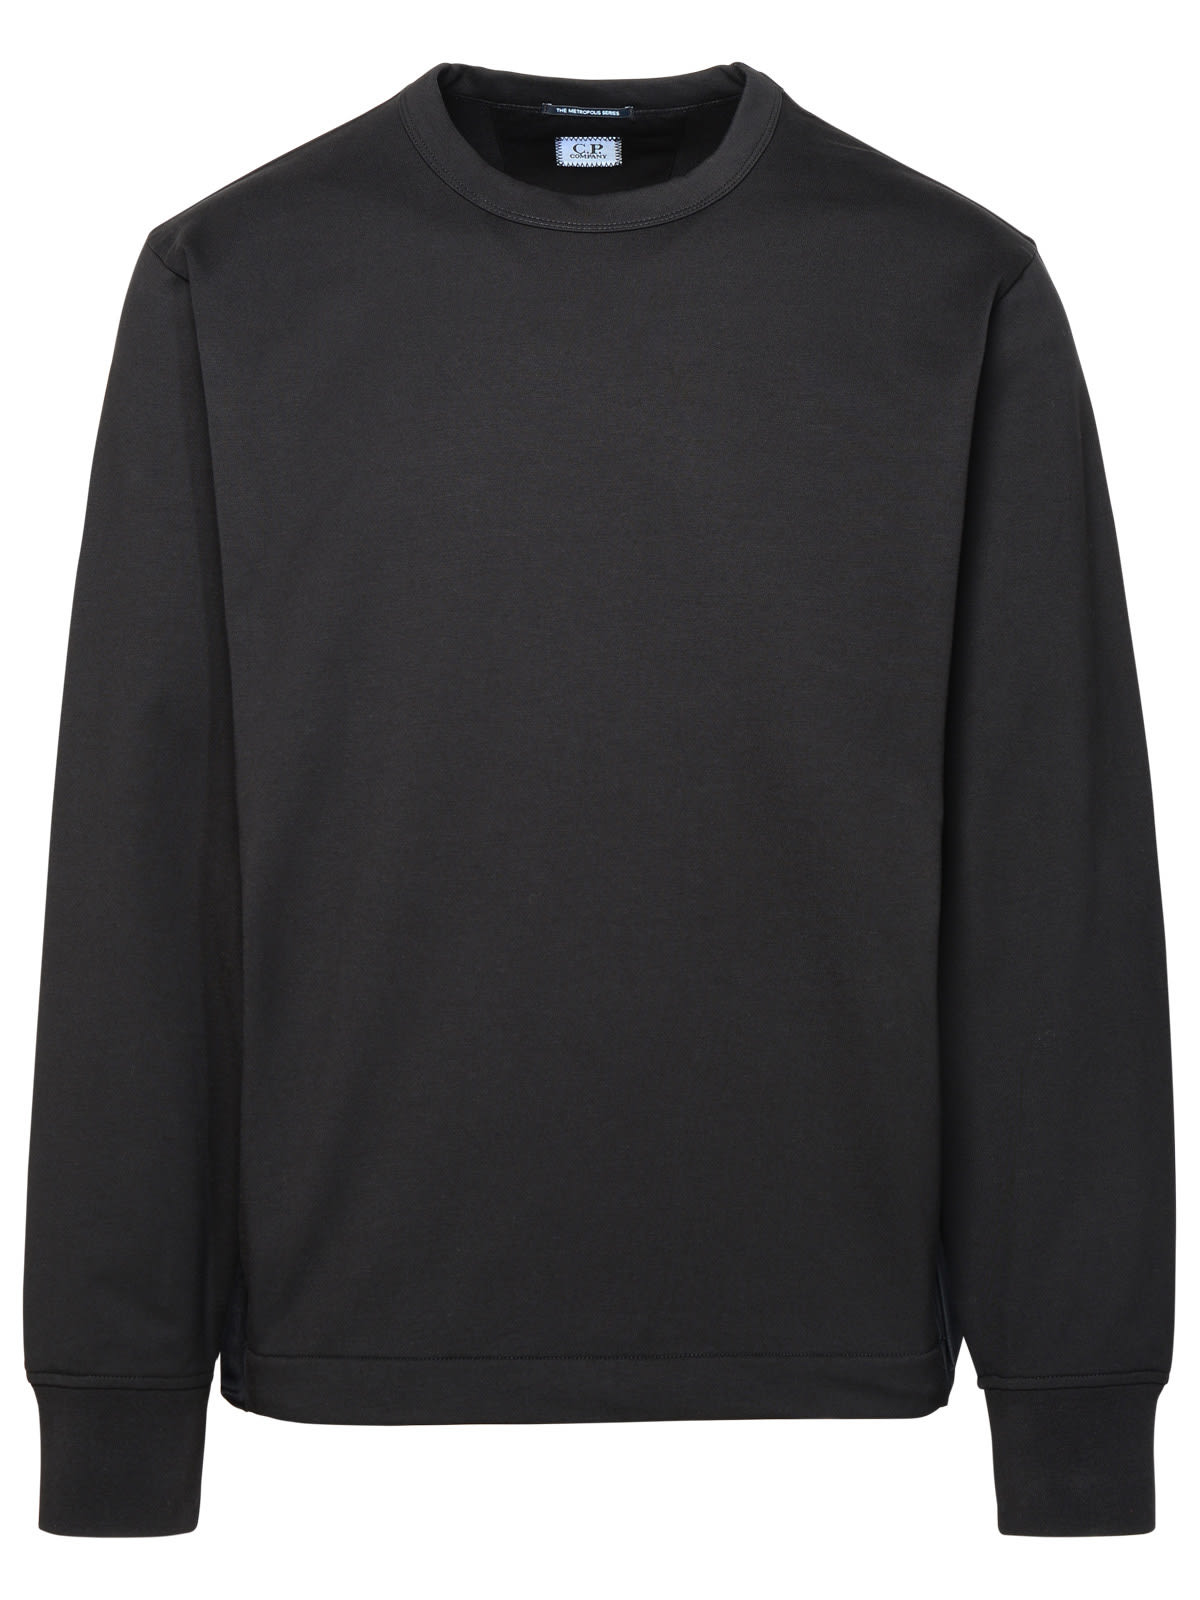 Black Cotton Blend Sweatshirt